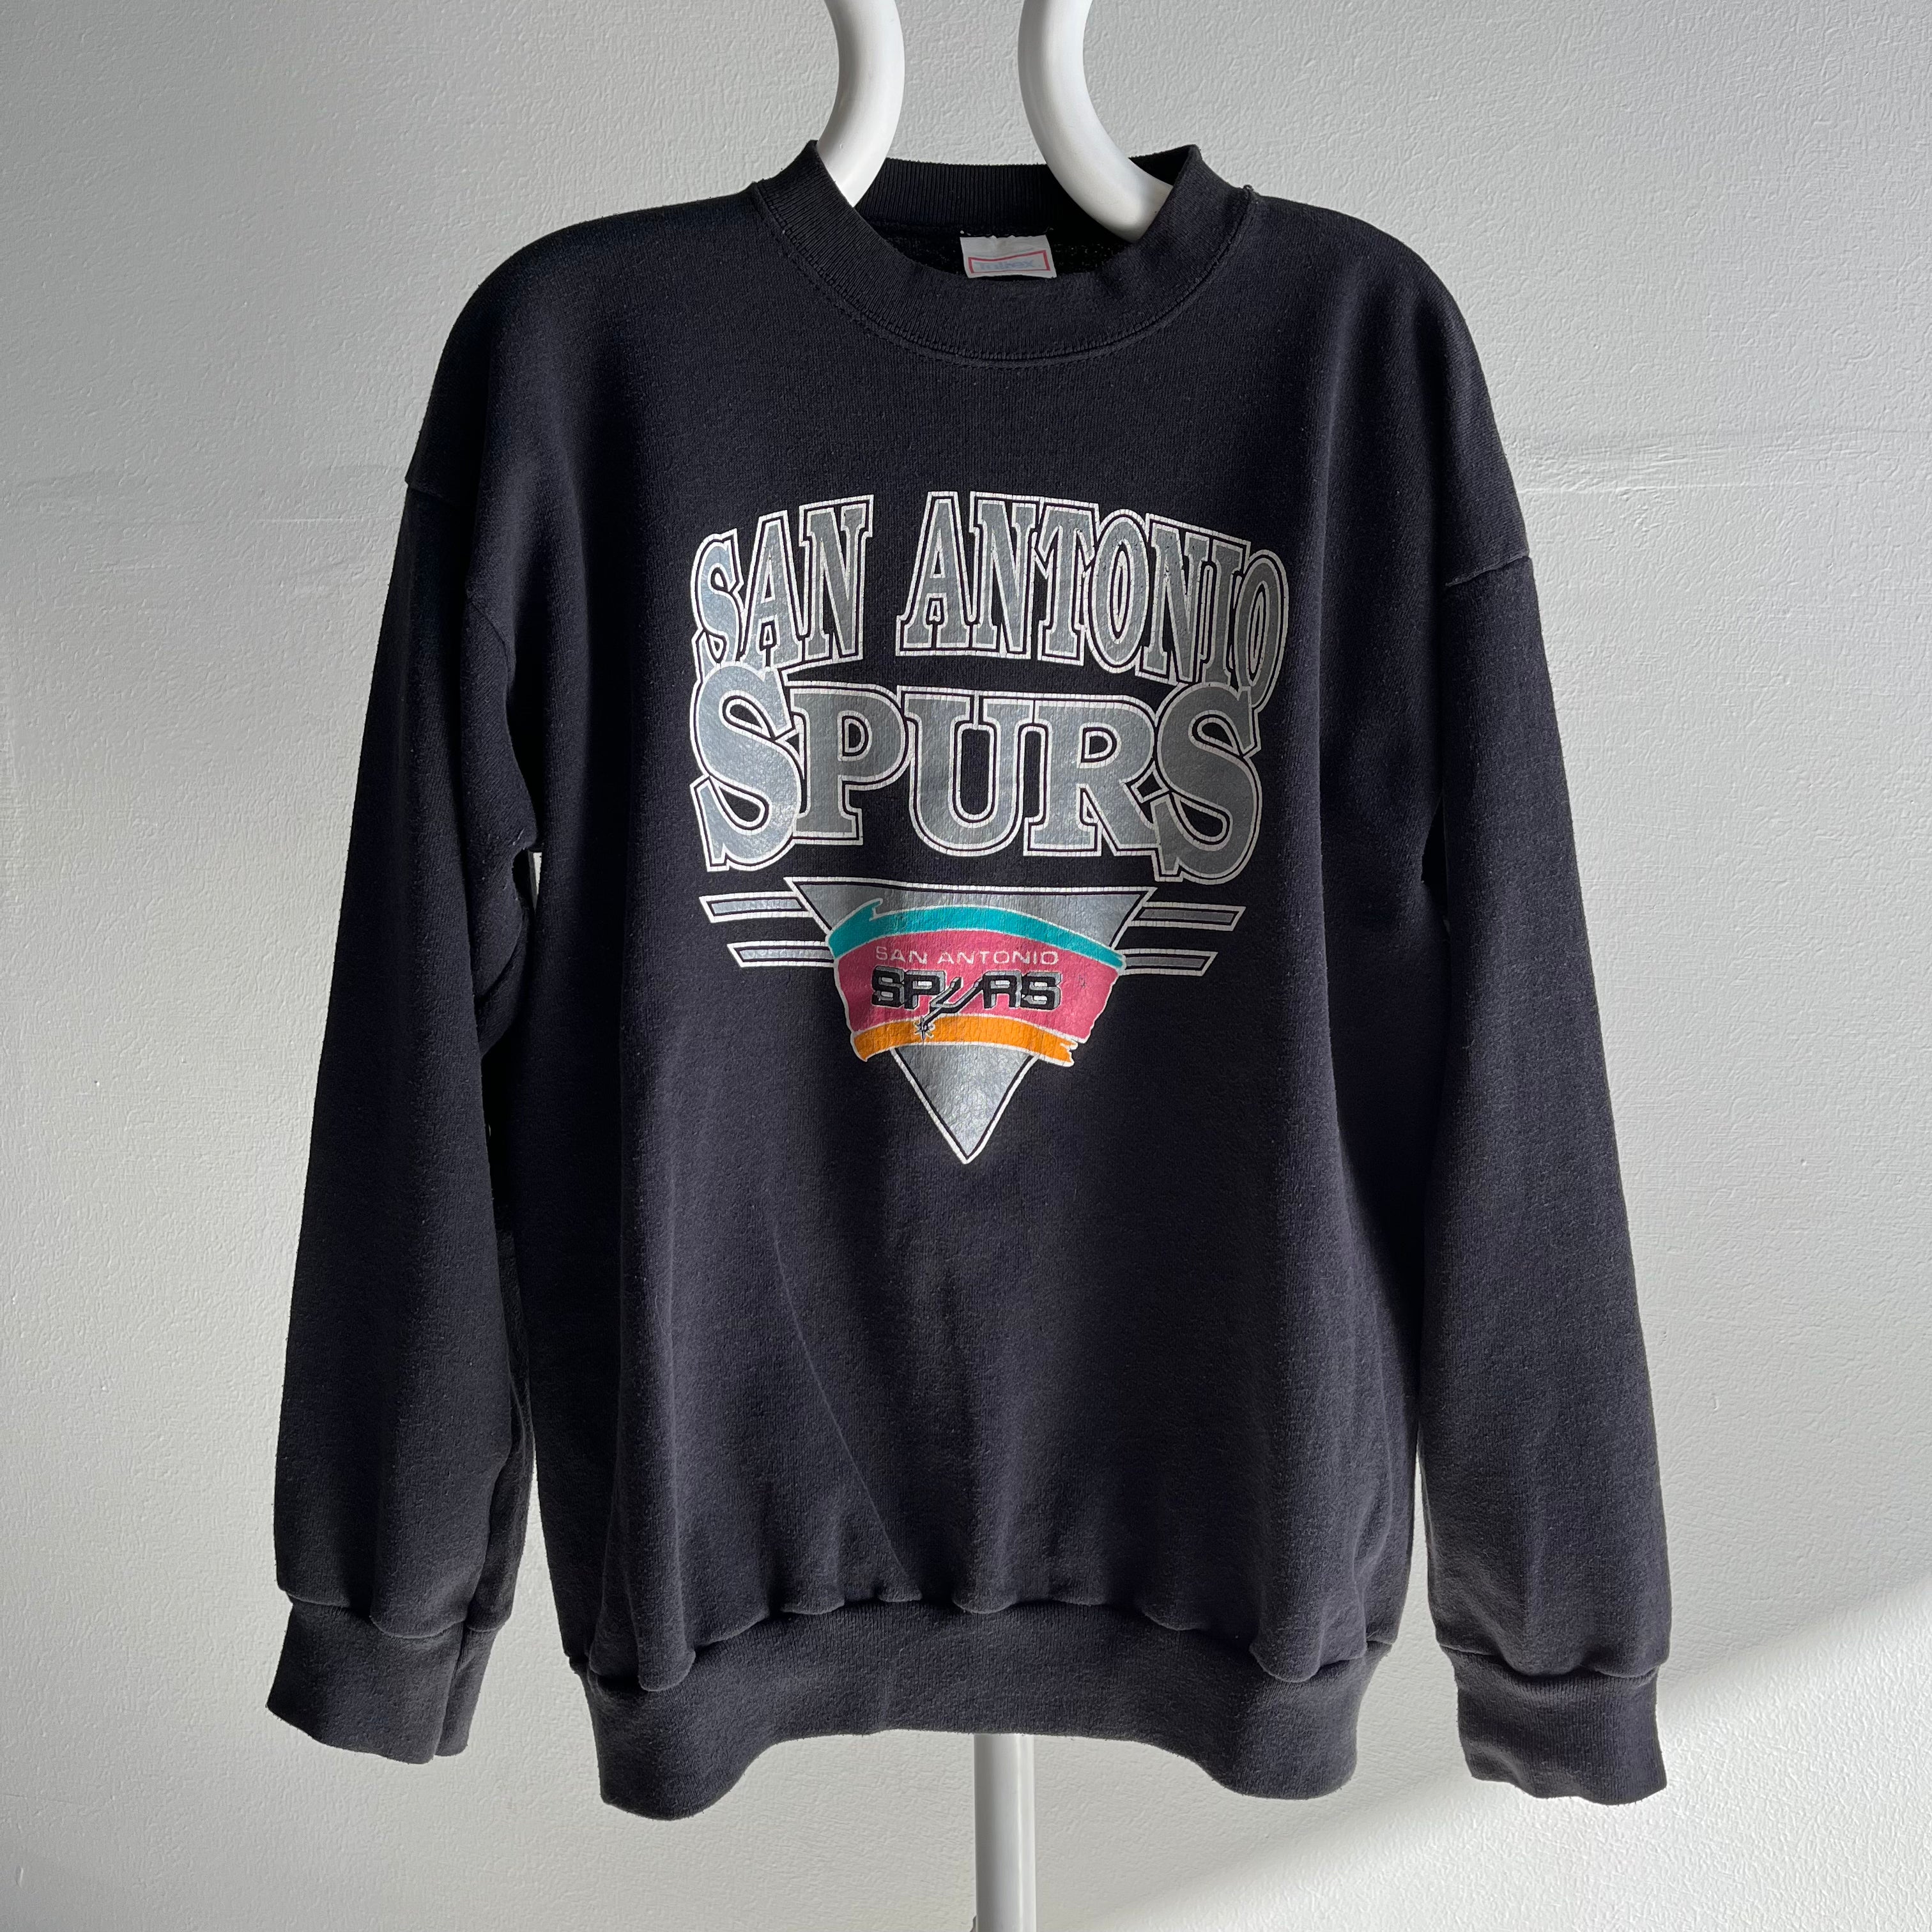 1990s San Antonio Spurs Sweatshirt by Tultex